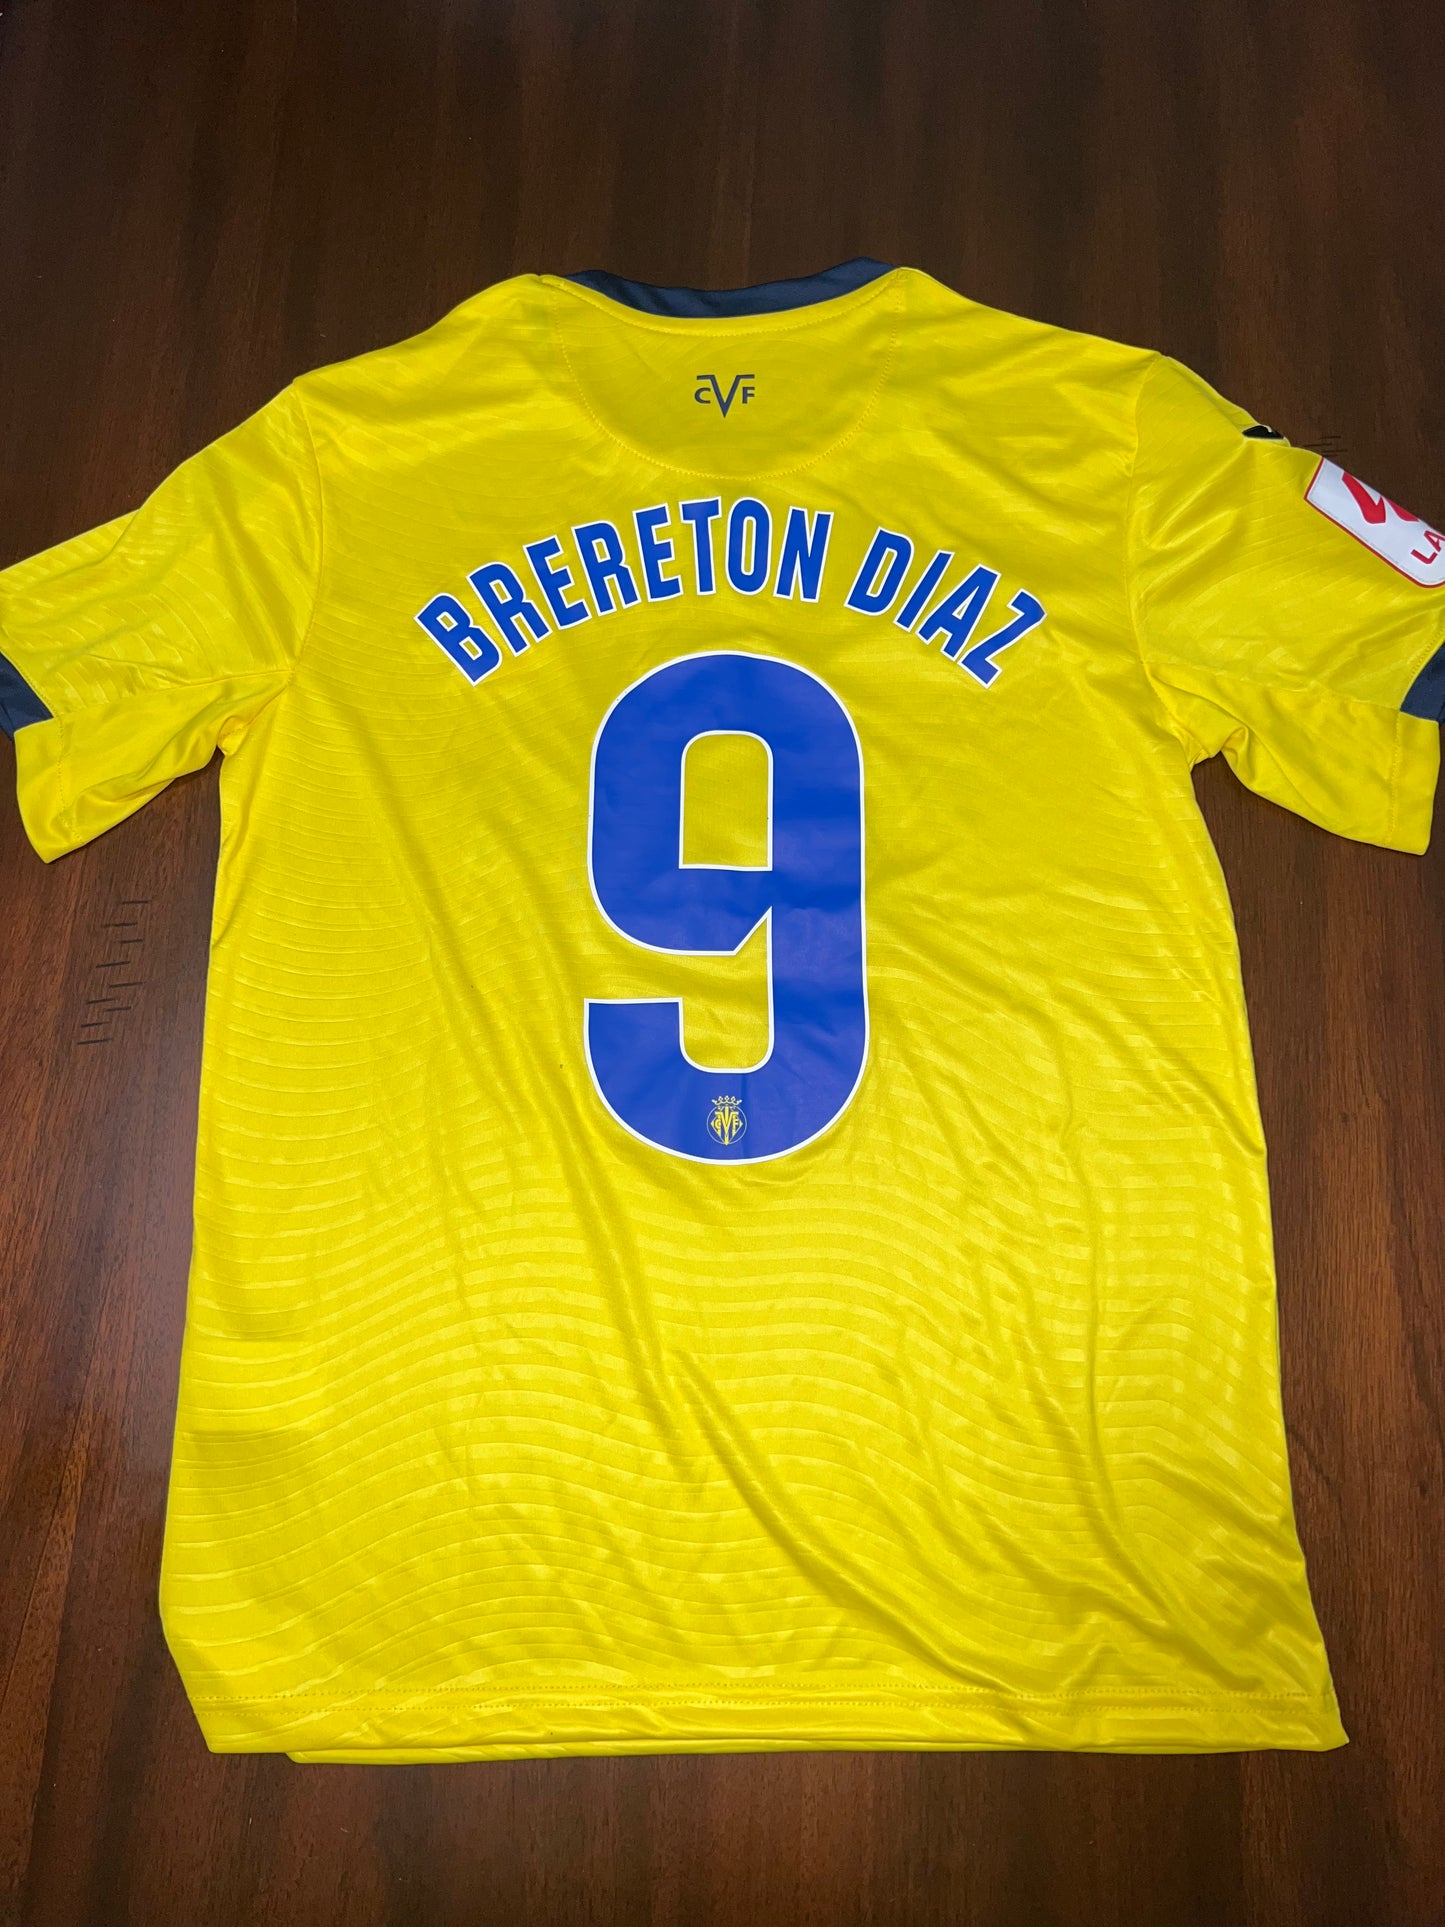 Camiseta Villa Real Brereton